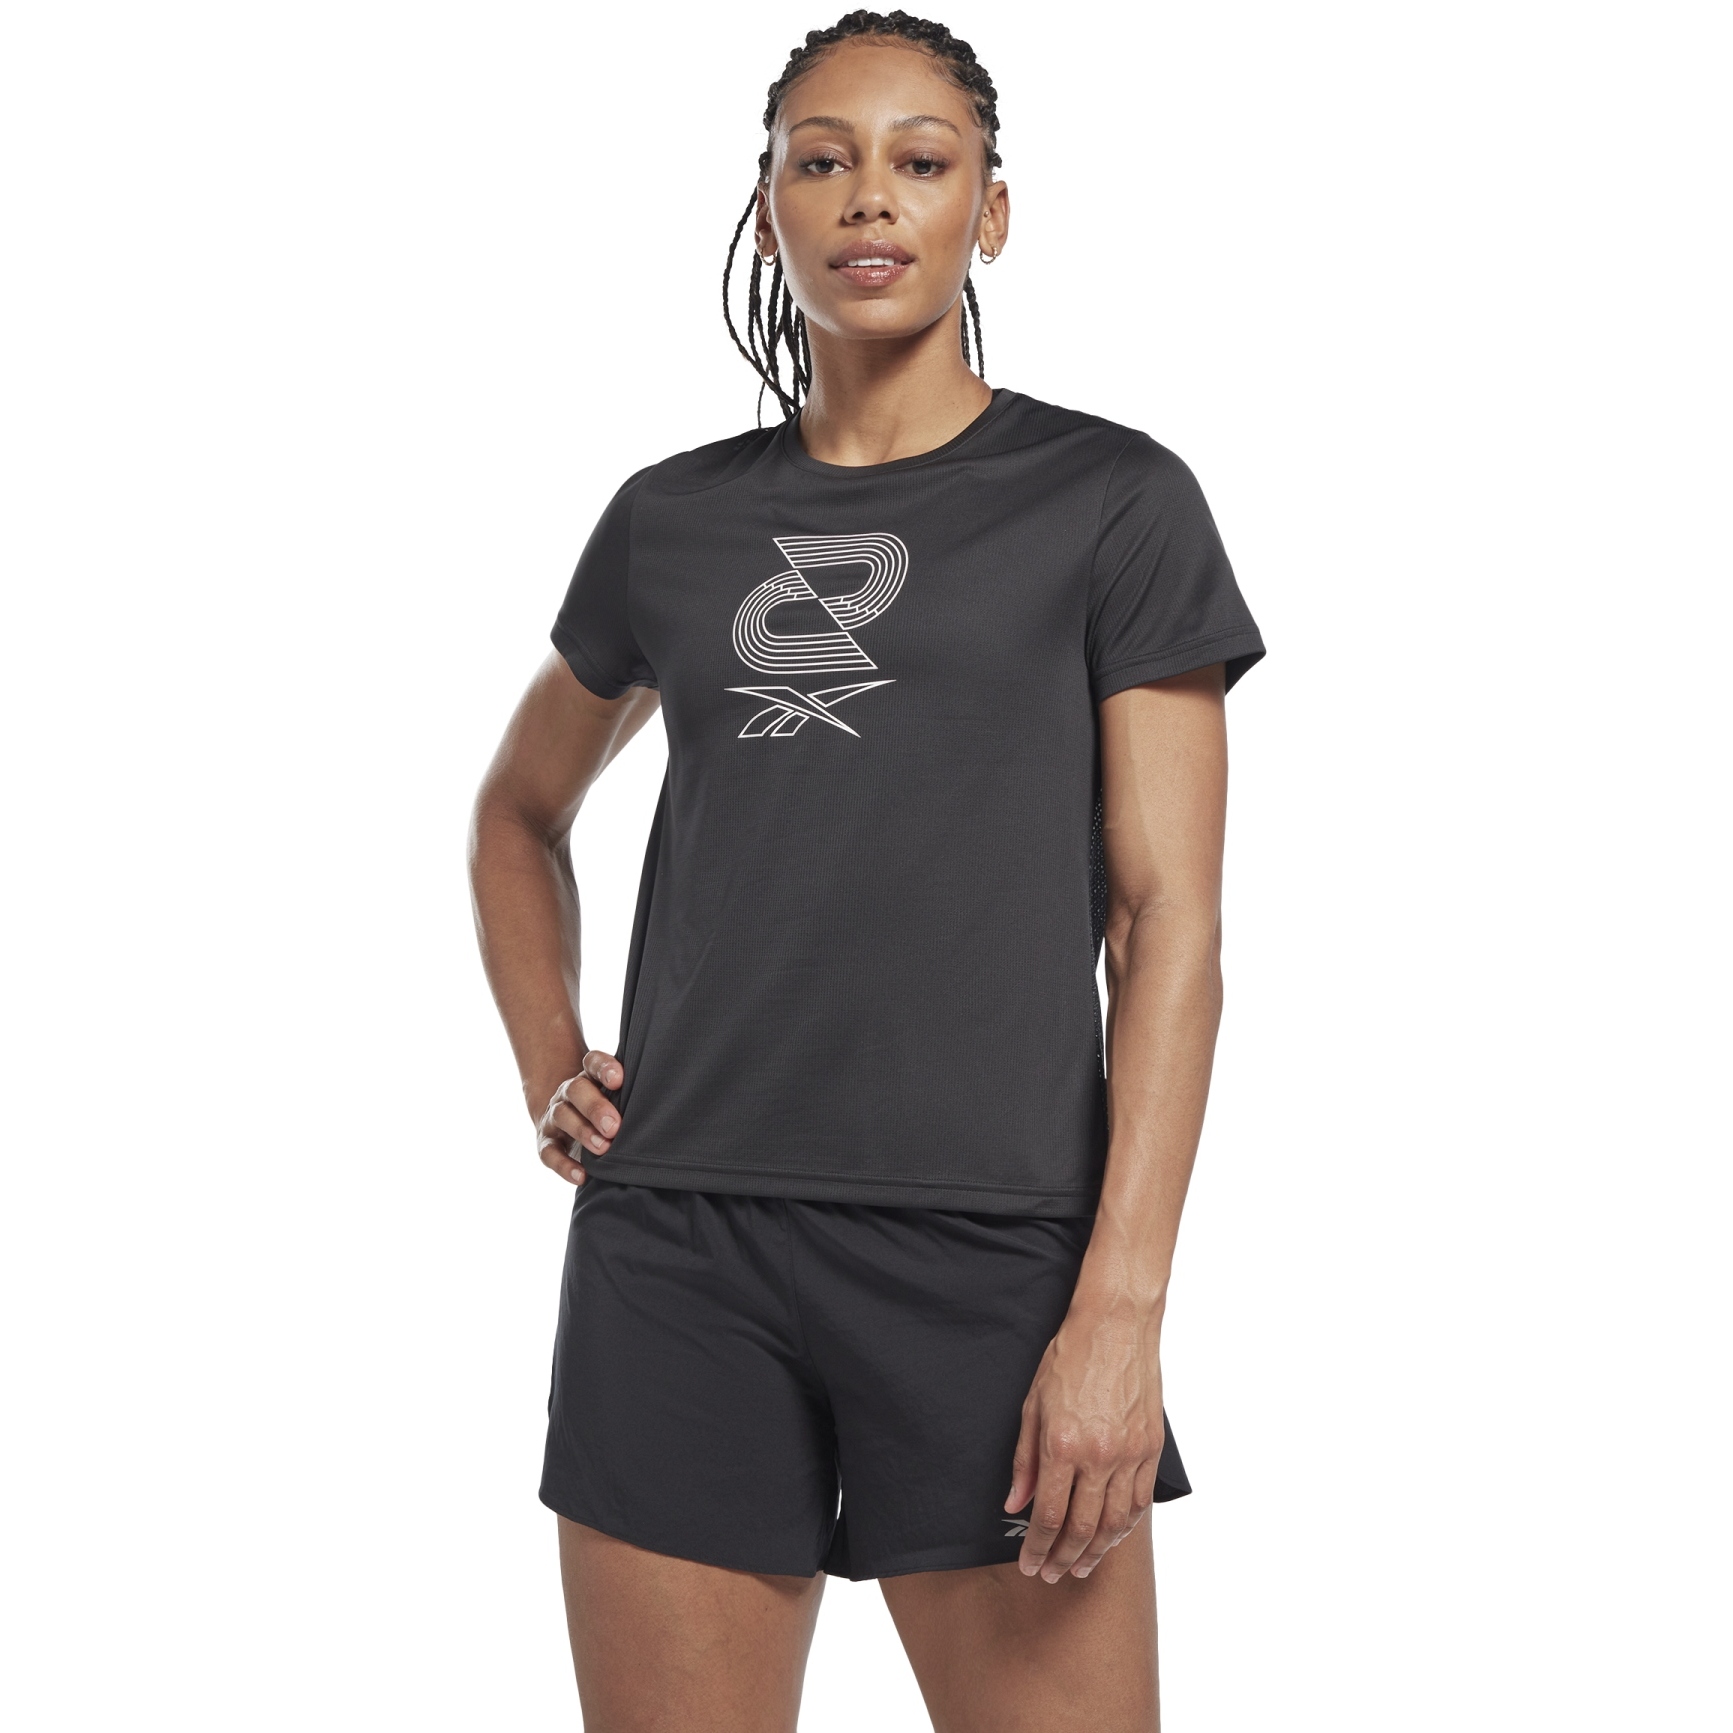 Productfoto van Reebok Running SW Graphic T-Shirt Dames - night black